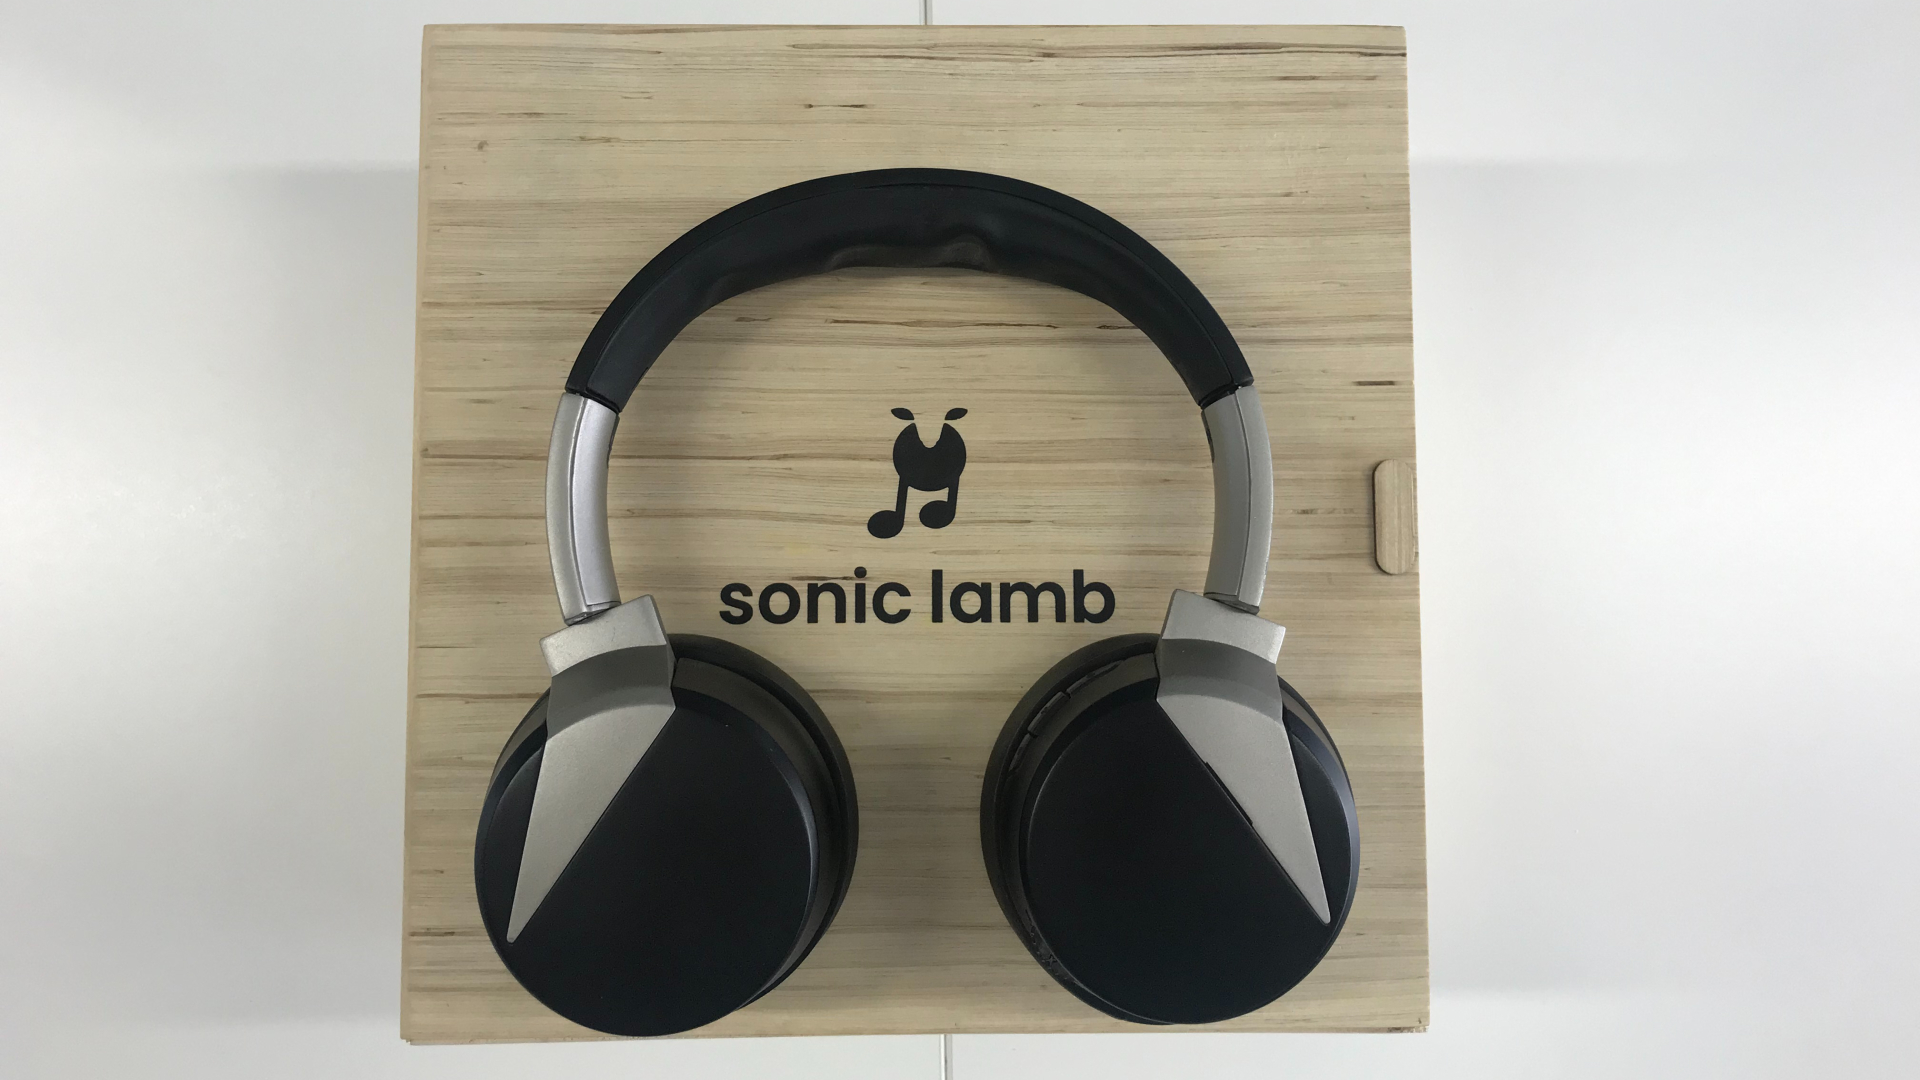 Sonic Lamb headphones on wooden box